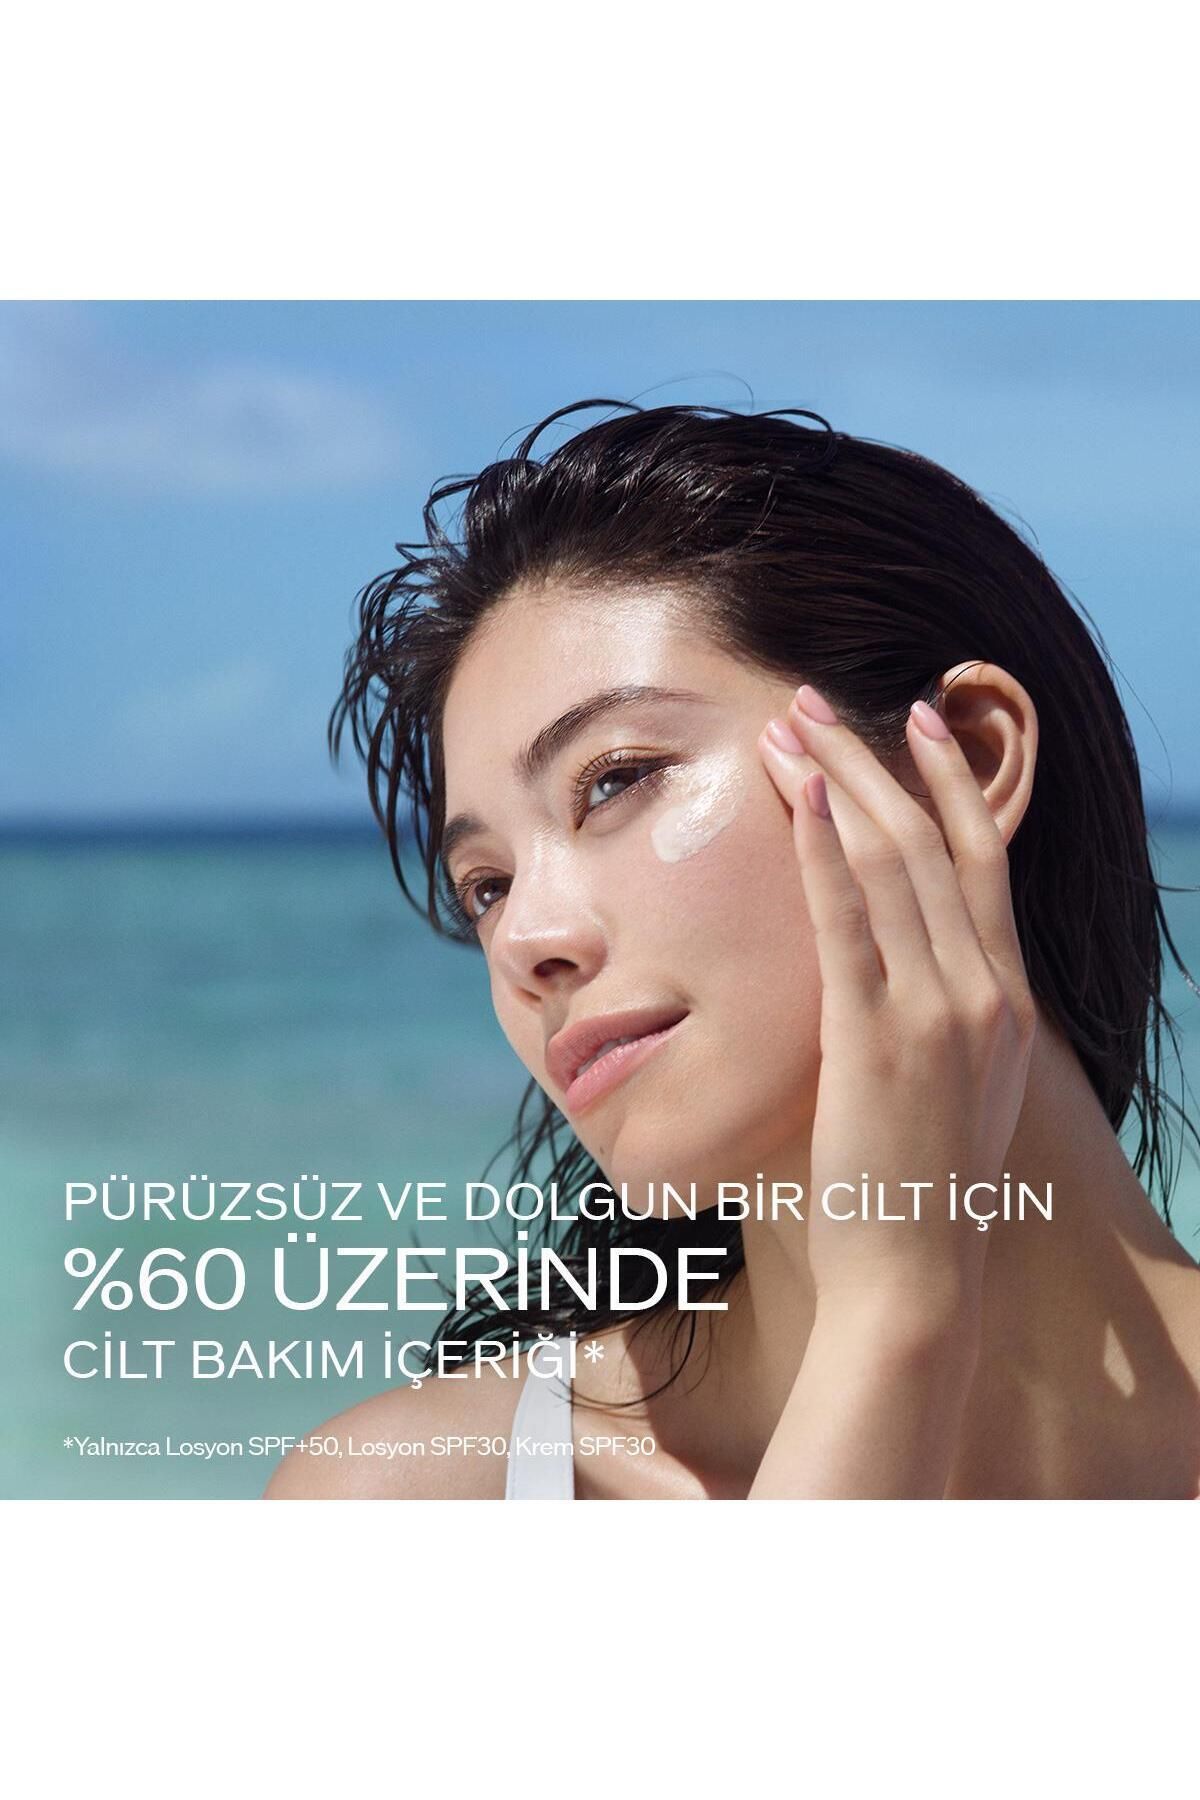 Shiseido کرم حفاظتی ضد آفتاب متخصص آبی GSC SPF50 50 میلی لیتر